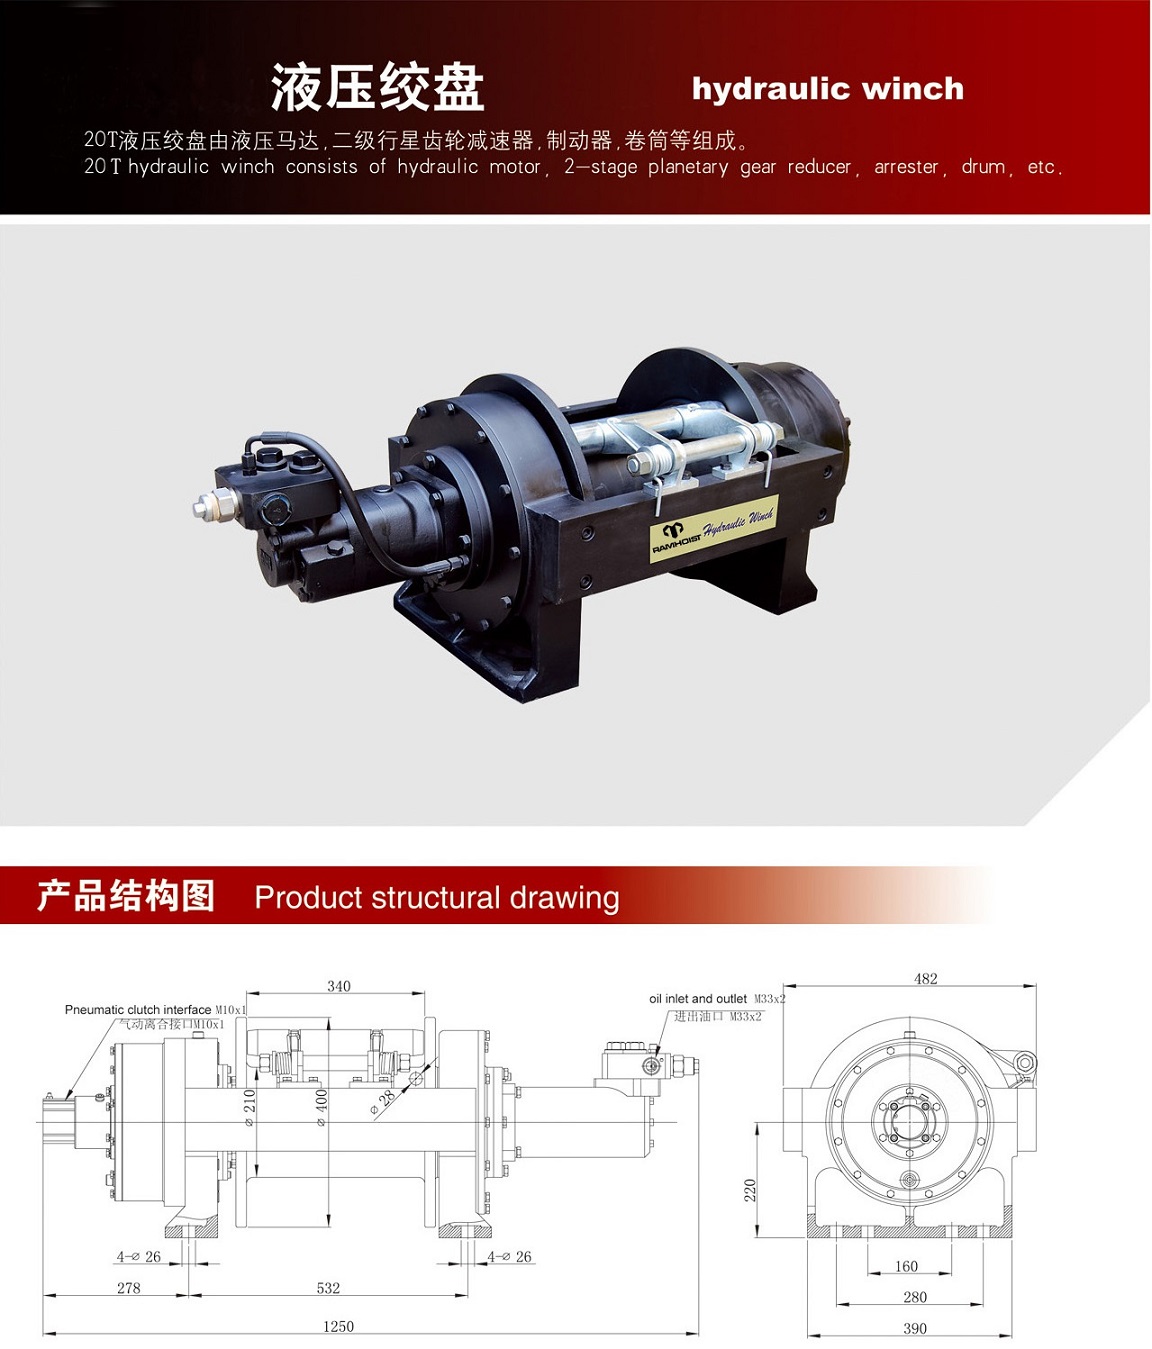 Technical parameters of 20ton hydraulic winch1.jpg